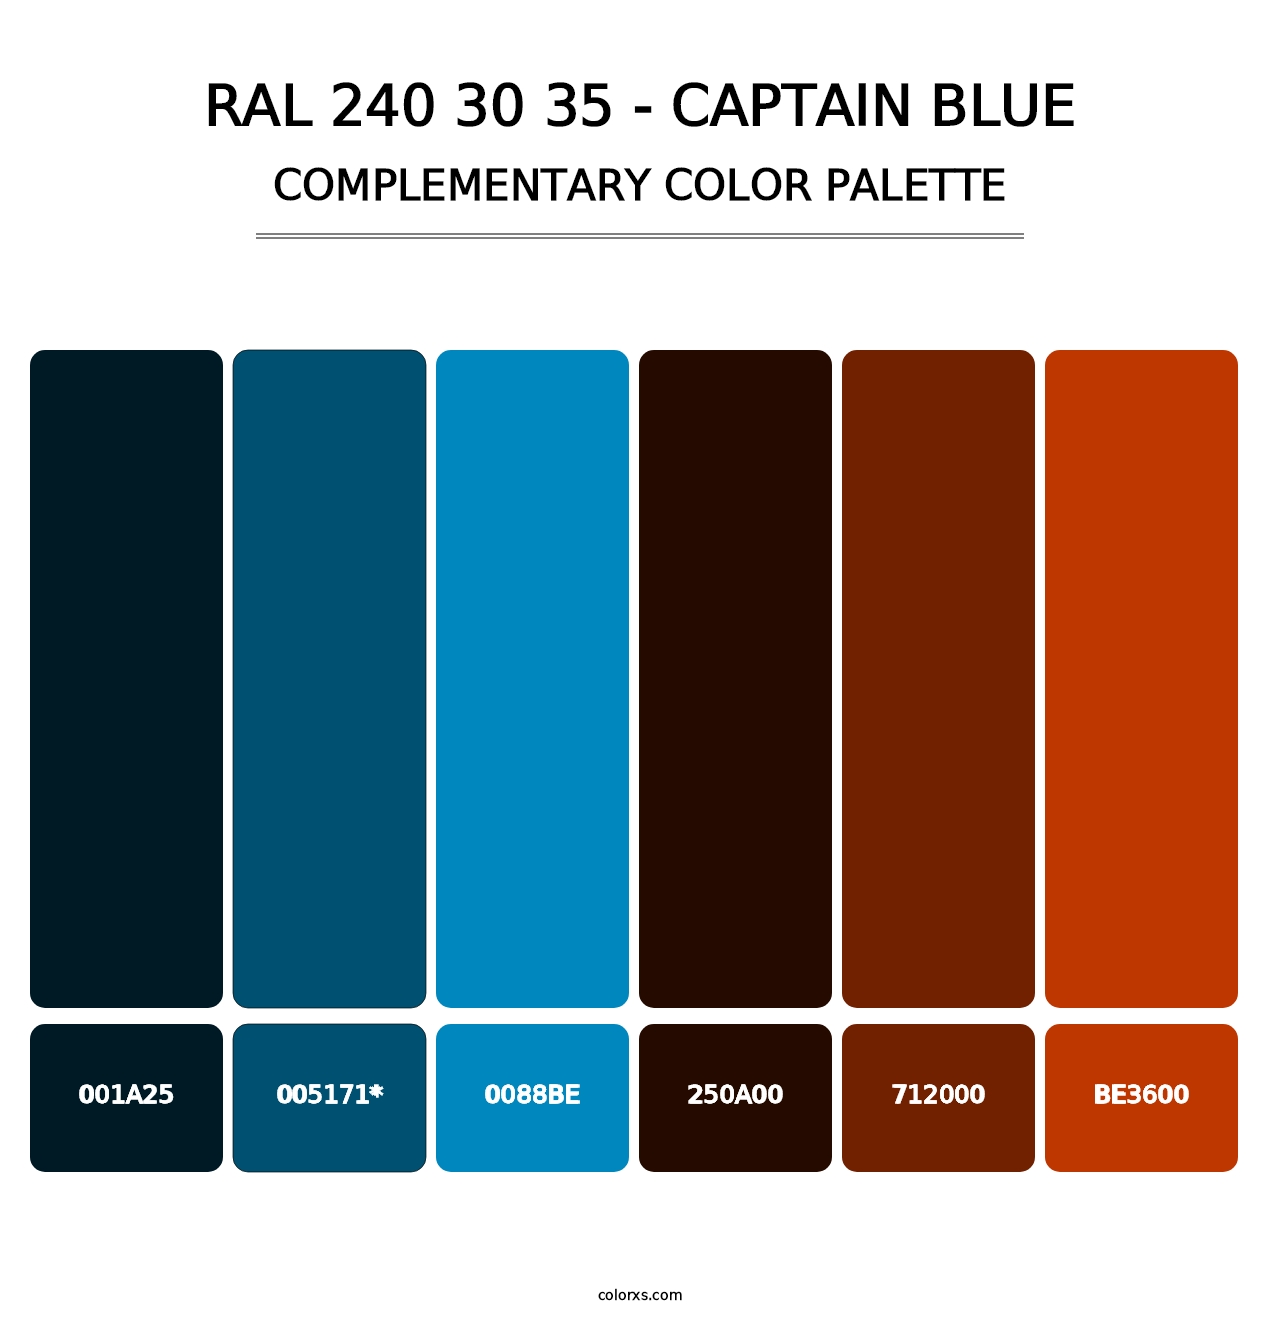 RAL 240 30 35 - Captain Blue - Complementary Color Palette